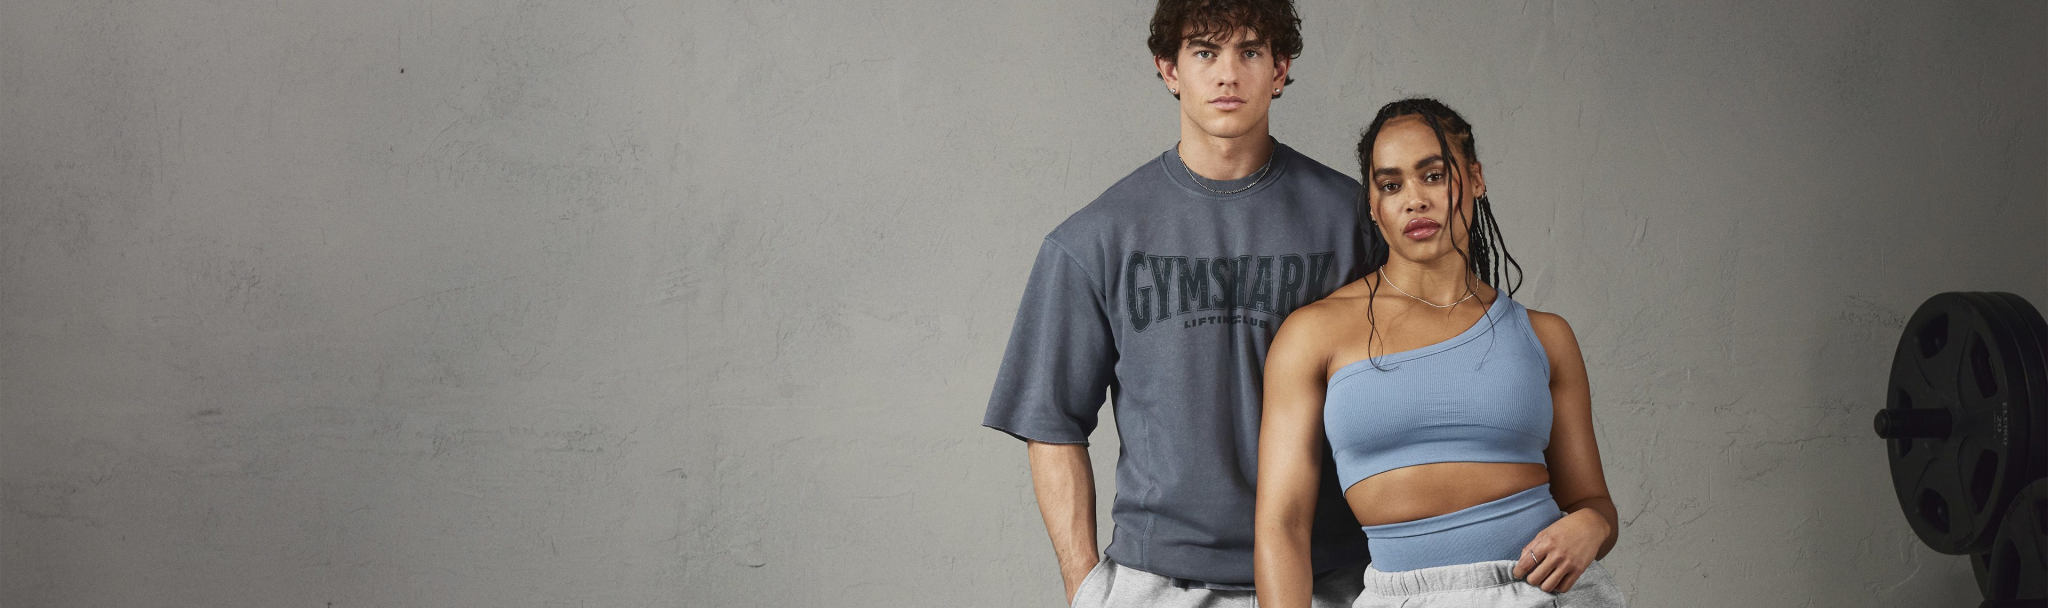 Gymshark Official Store - Shop Gym Clothes & Workout Clothes